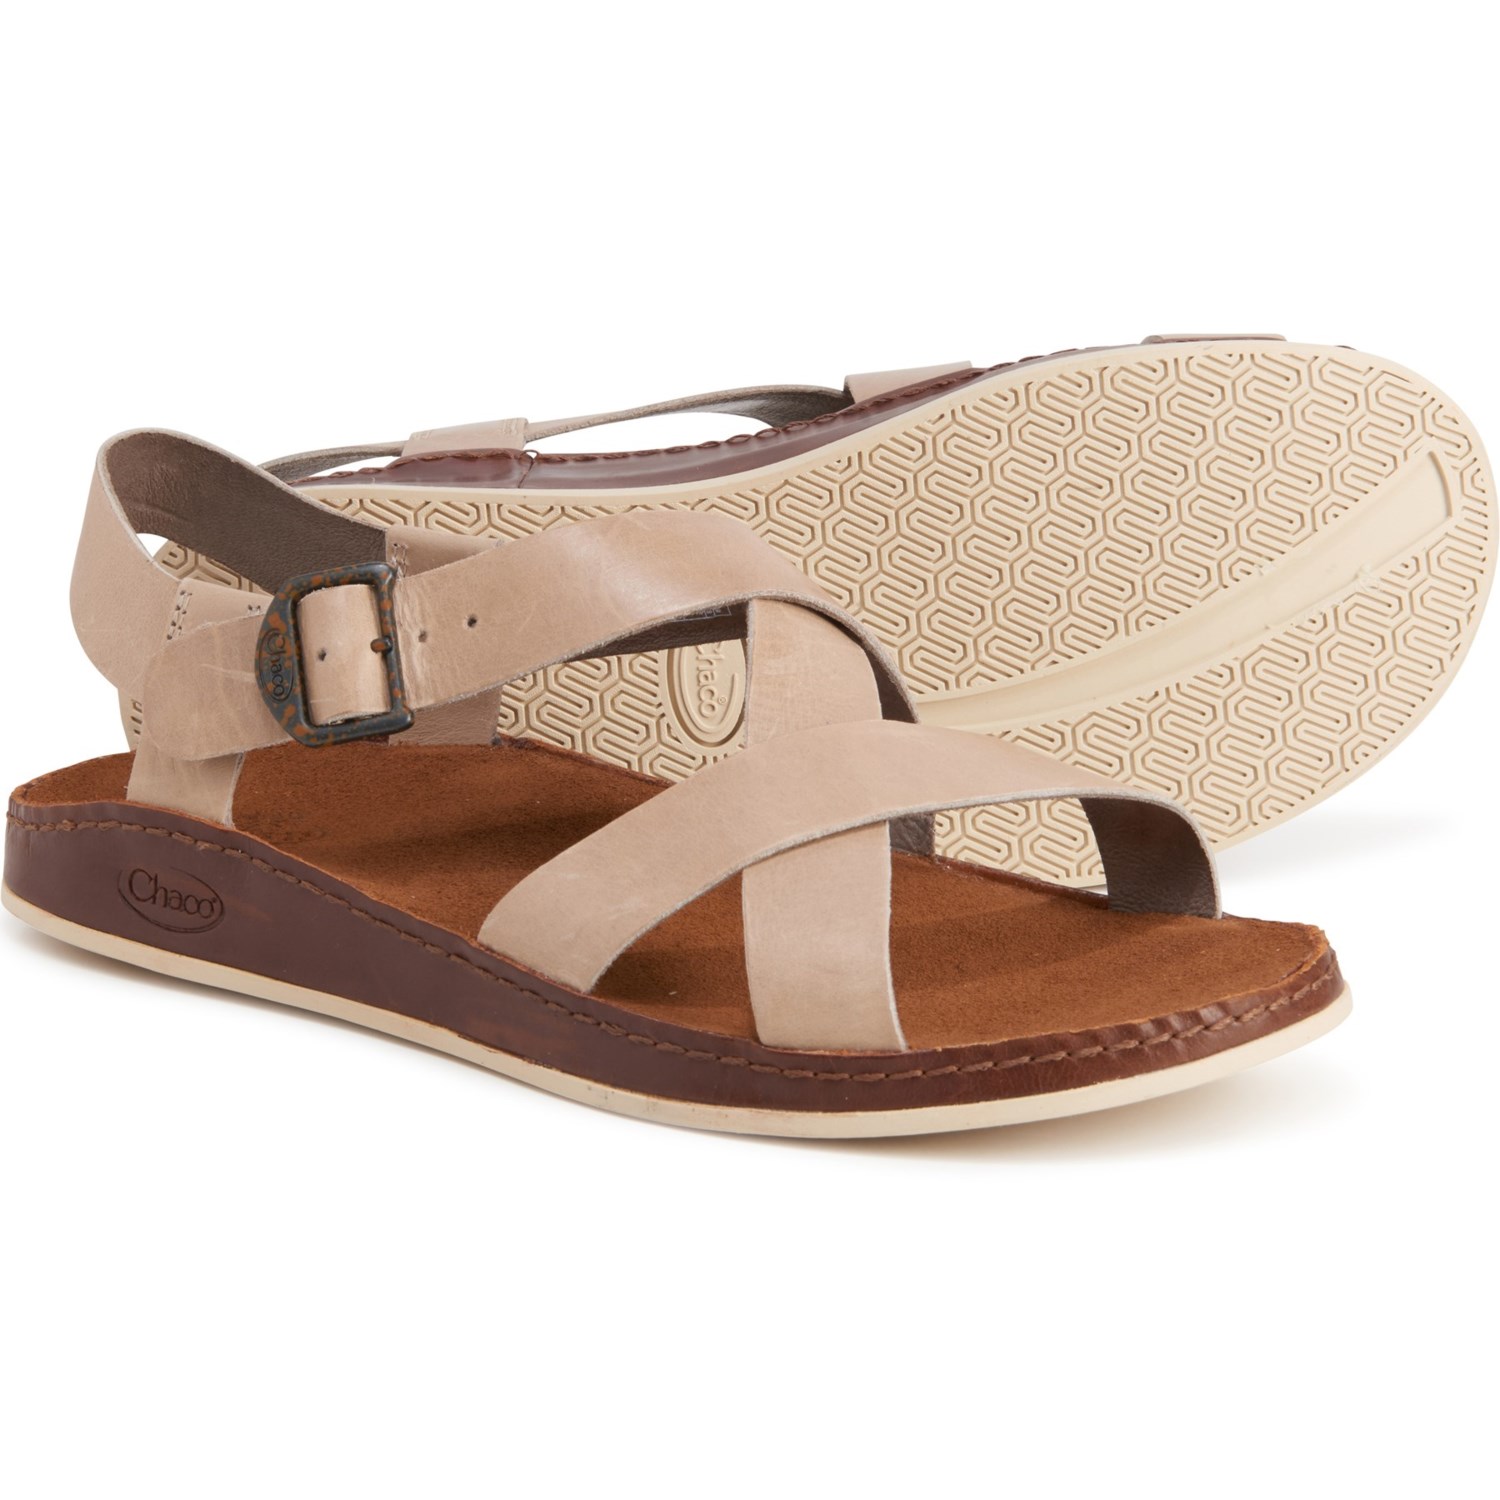 Chaco Wayfarer Sandals (For Women) - Save 47%